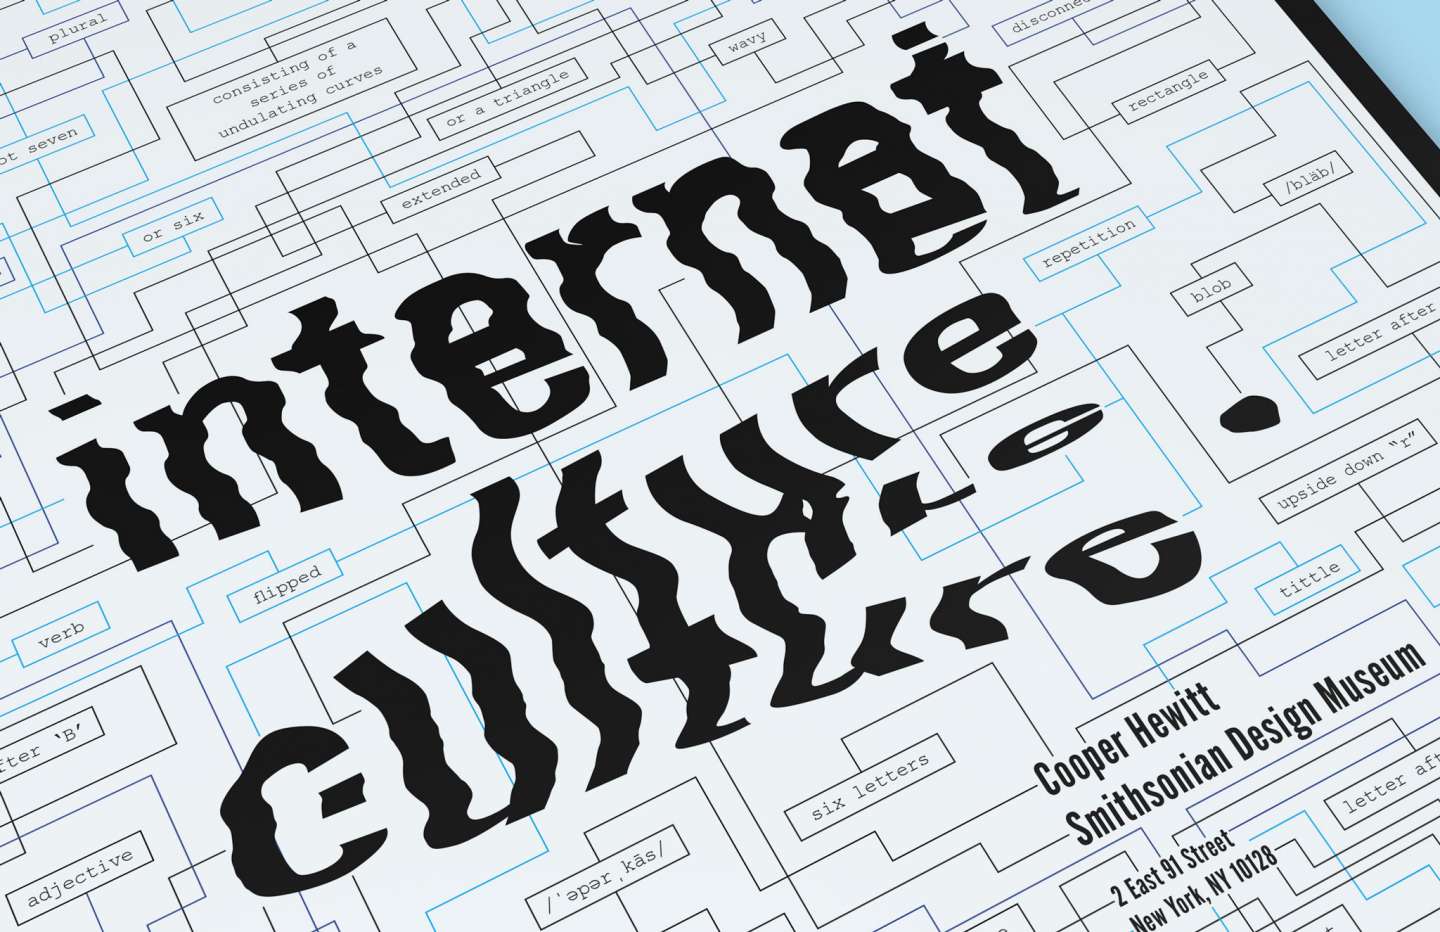 Internet Culture Poster